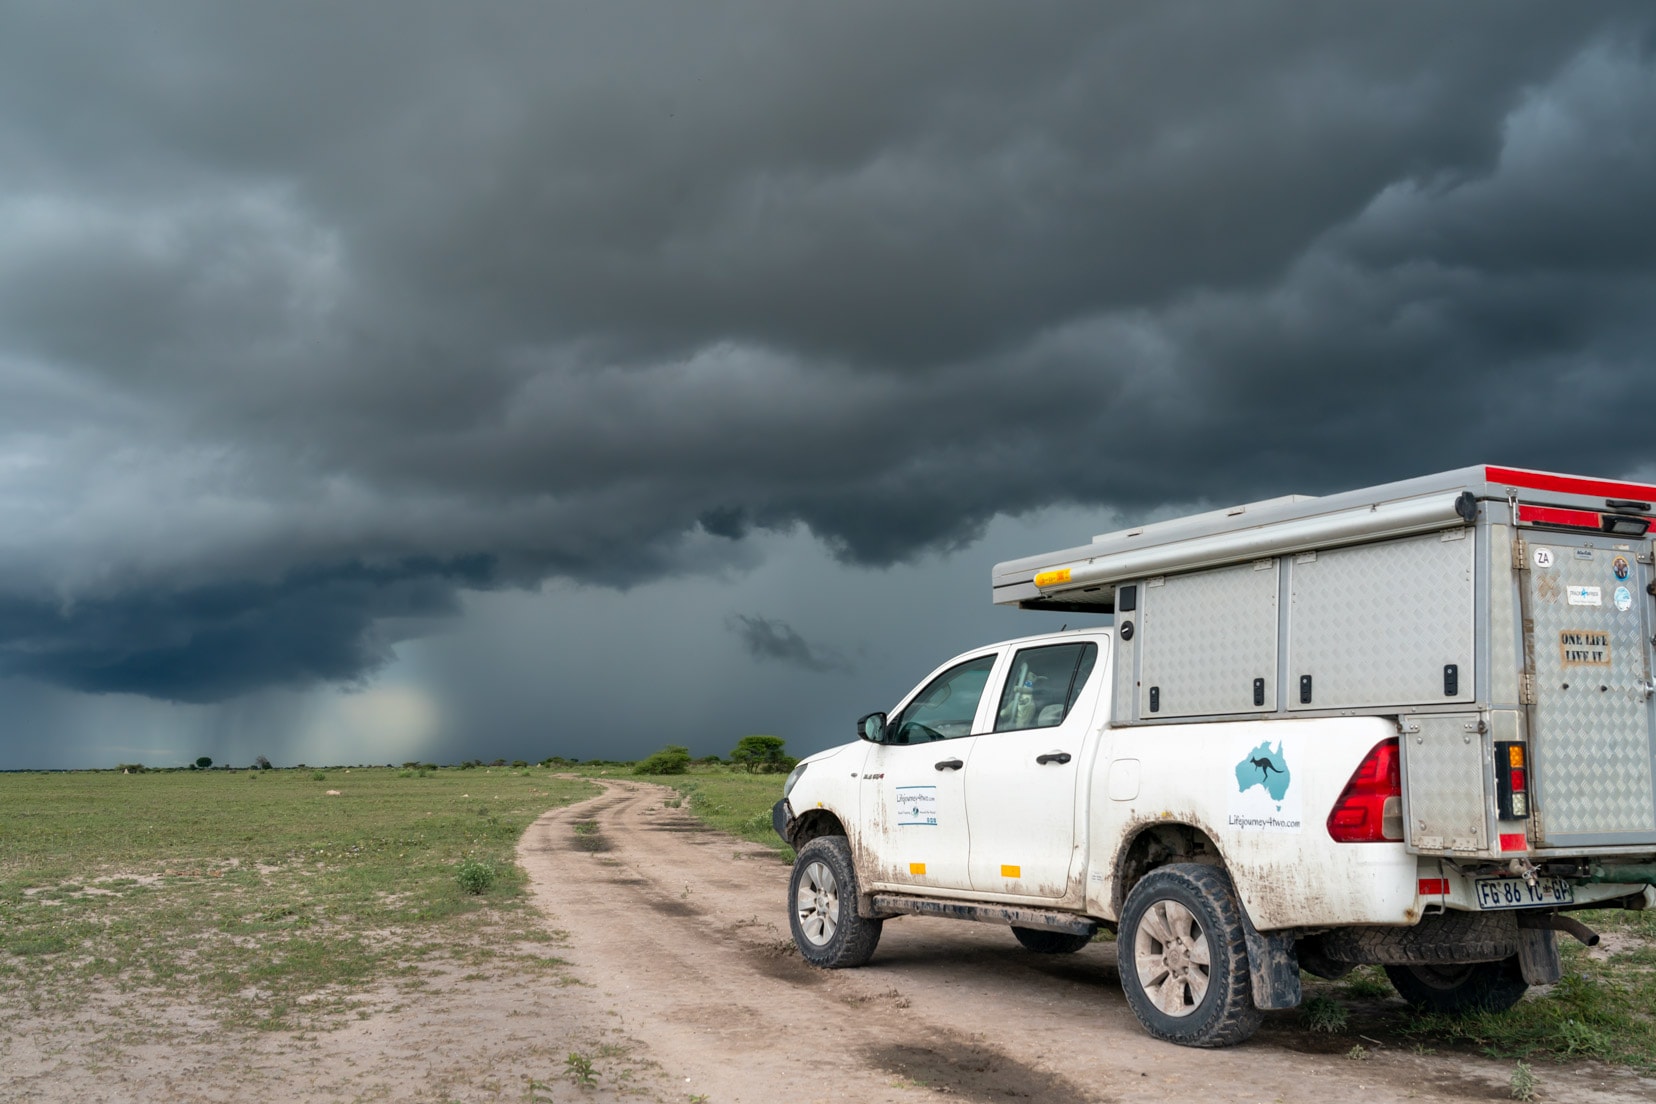 Intense summer thunderstorm bears down on a 4x4 on an open plain on our overlanding Botswana trip